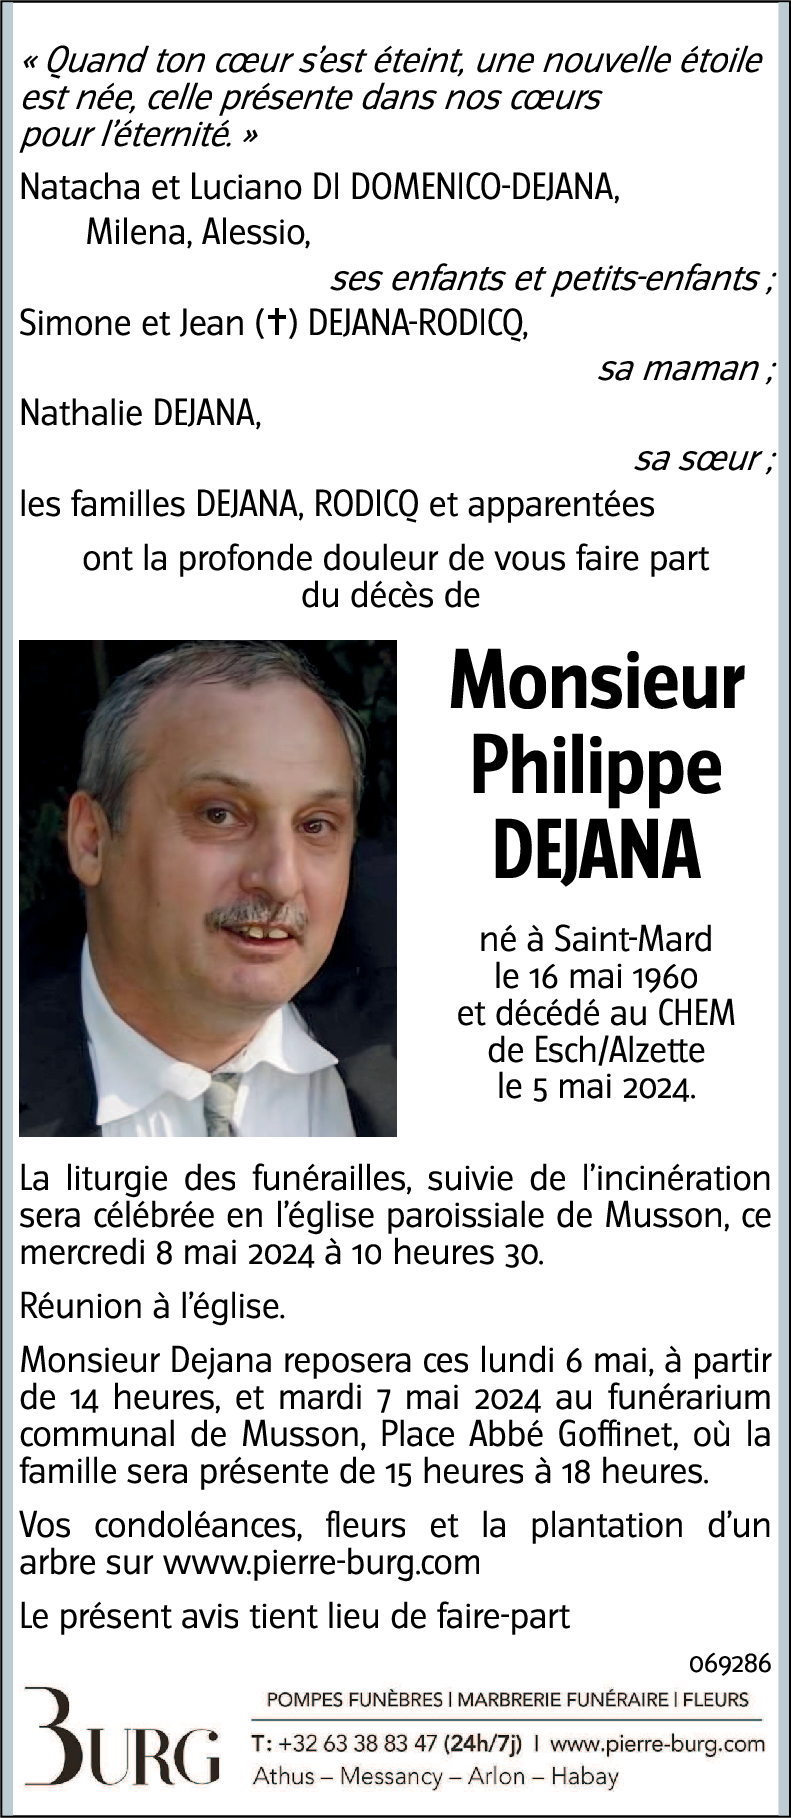 Philippe DEJANA